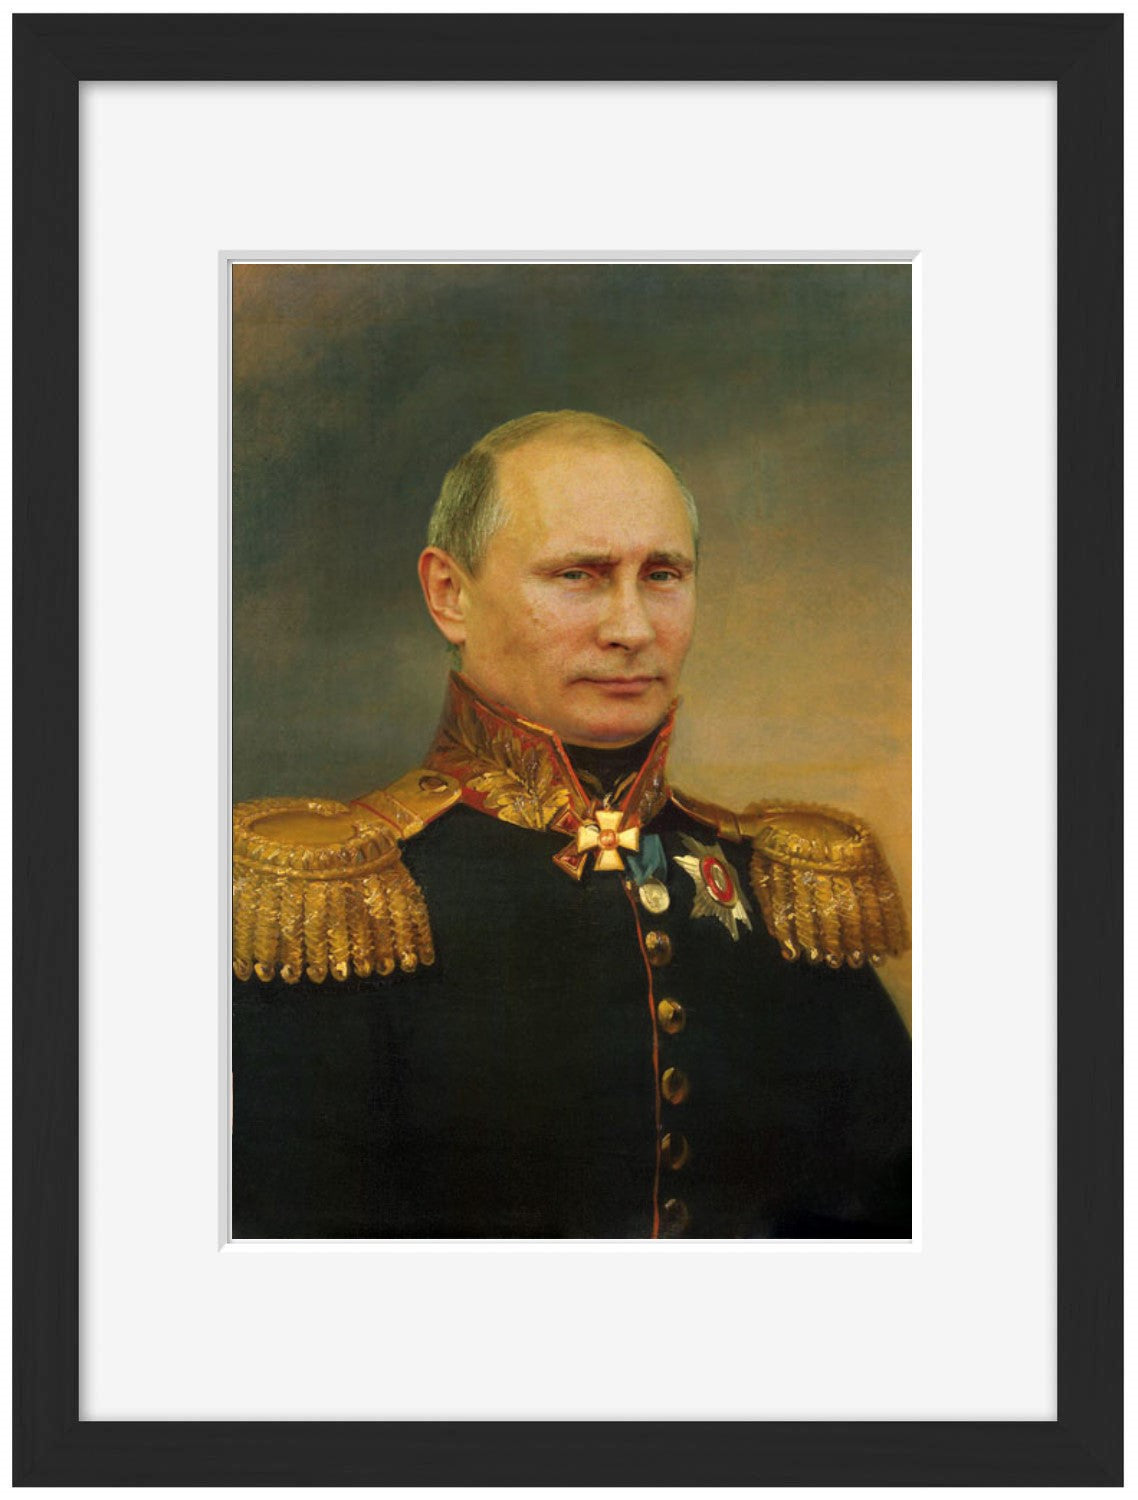 Military Poutine-historical, print-Framed Print-30 x 40 cm-BLUE SHAKER